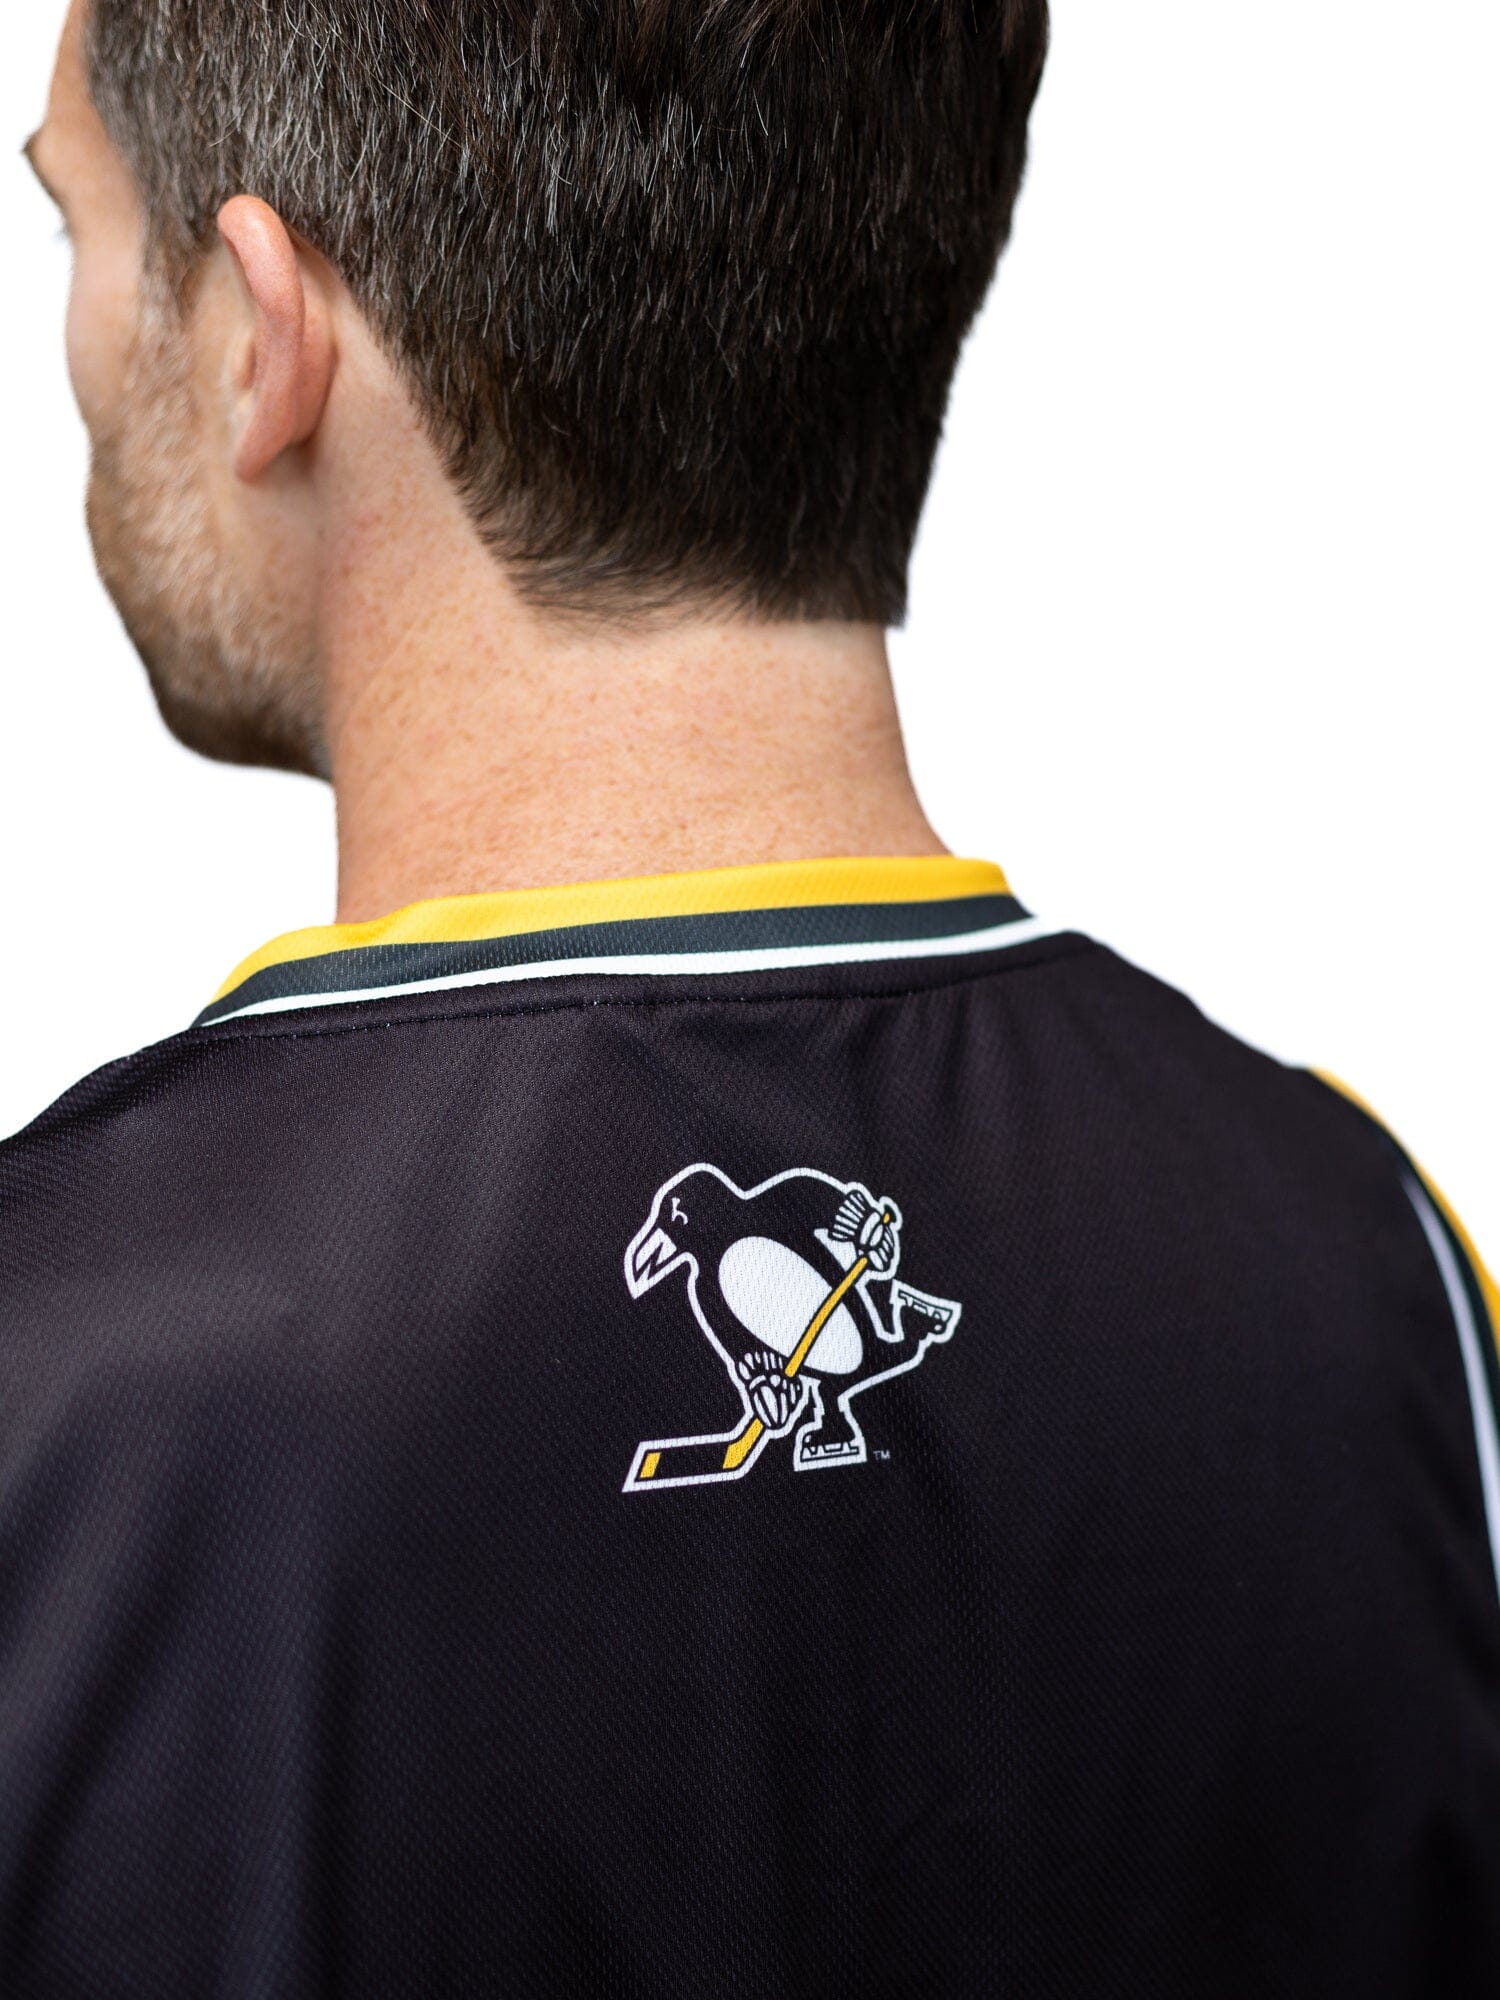 Pittsburgh Penguins Alternate Jersey Design : r/hockey